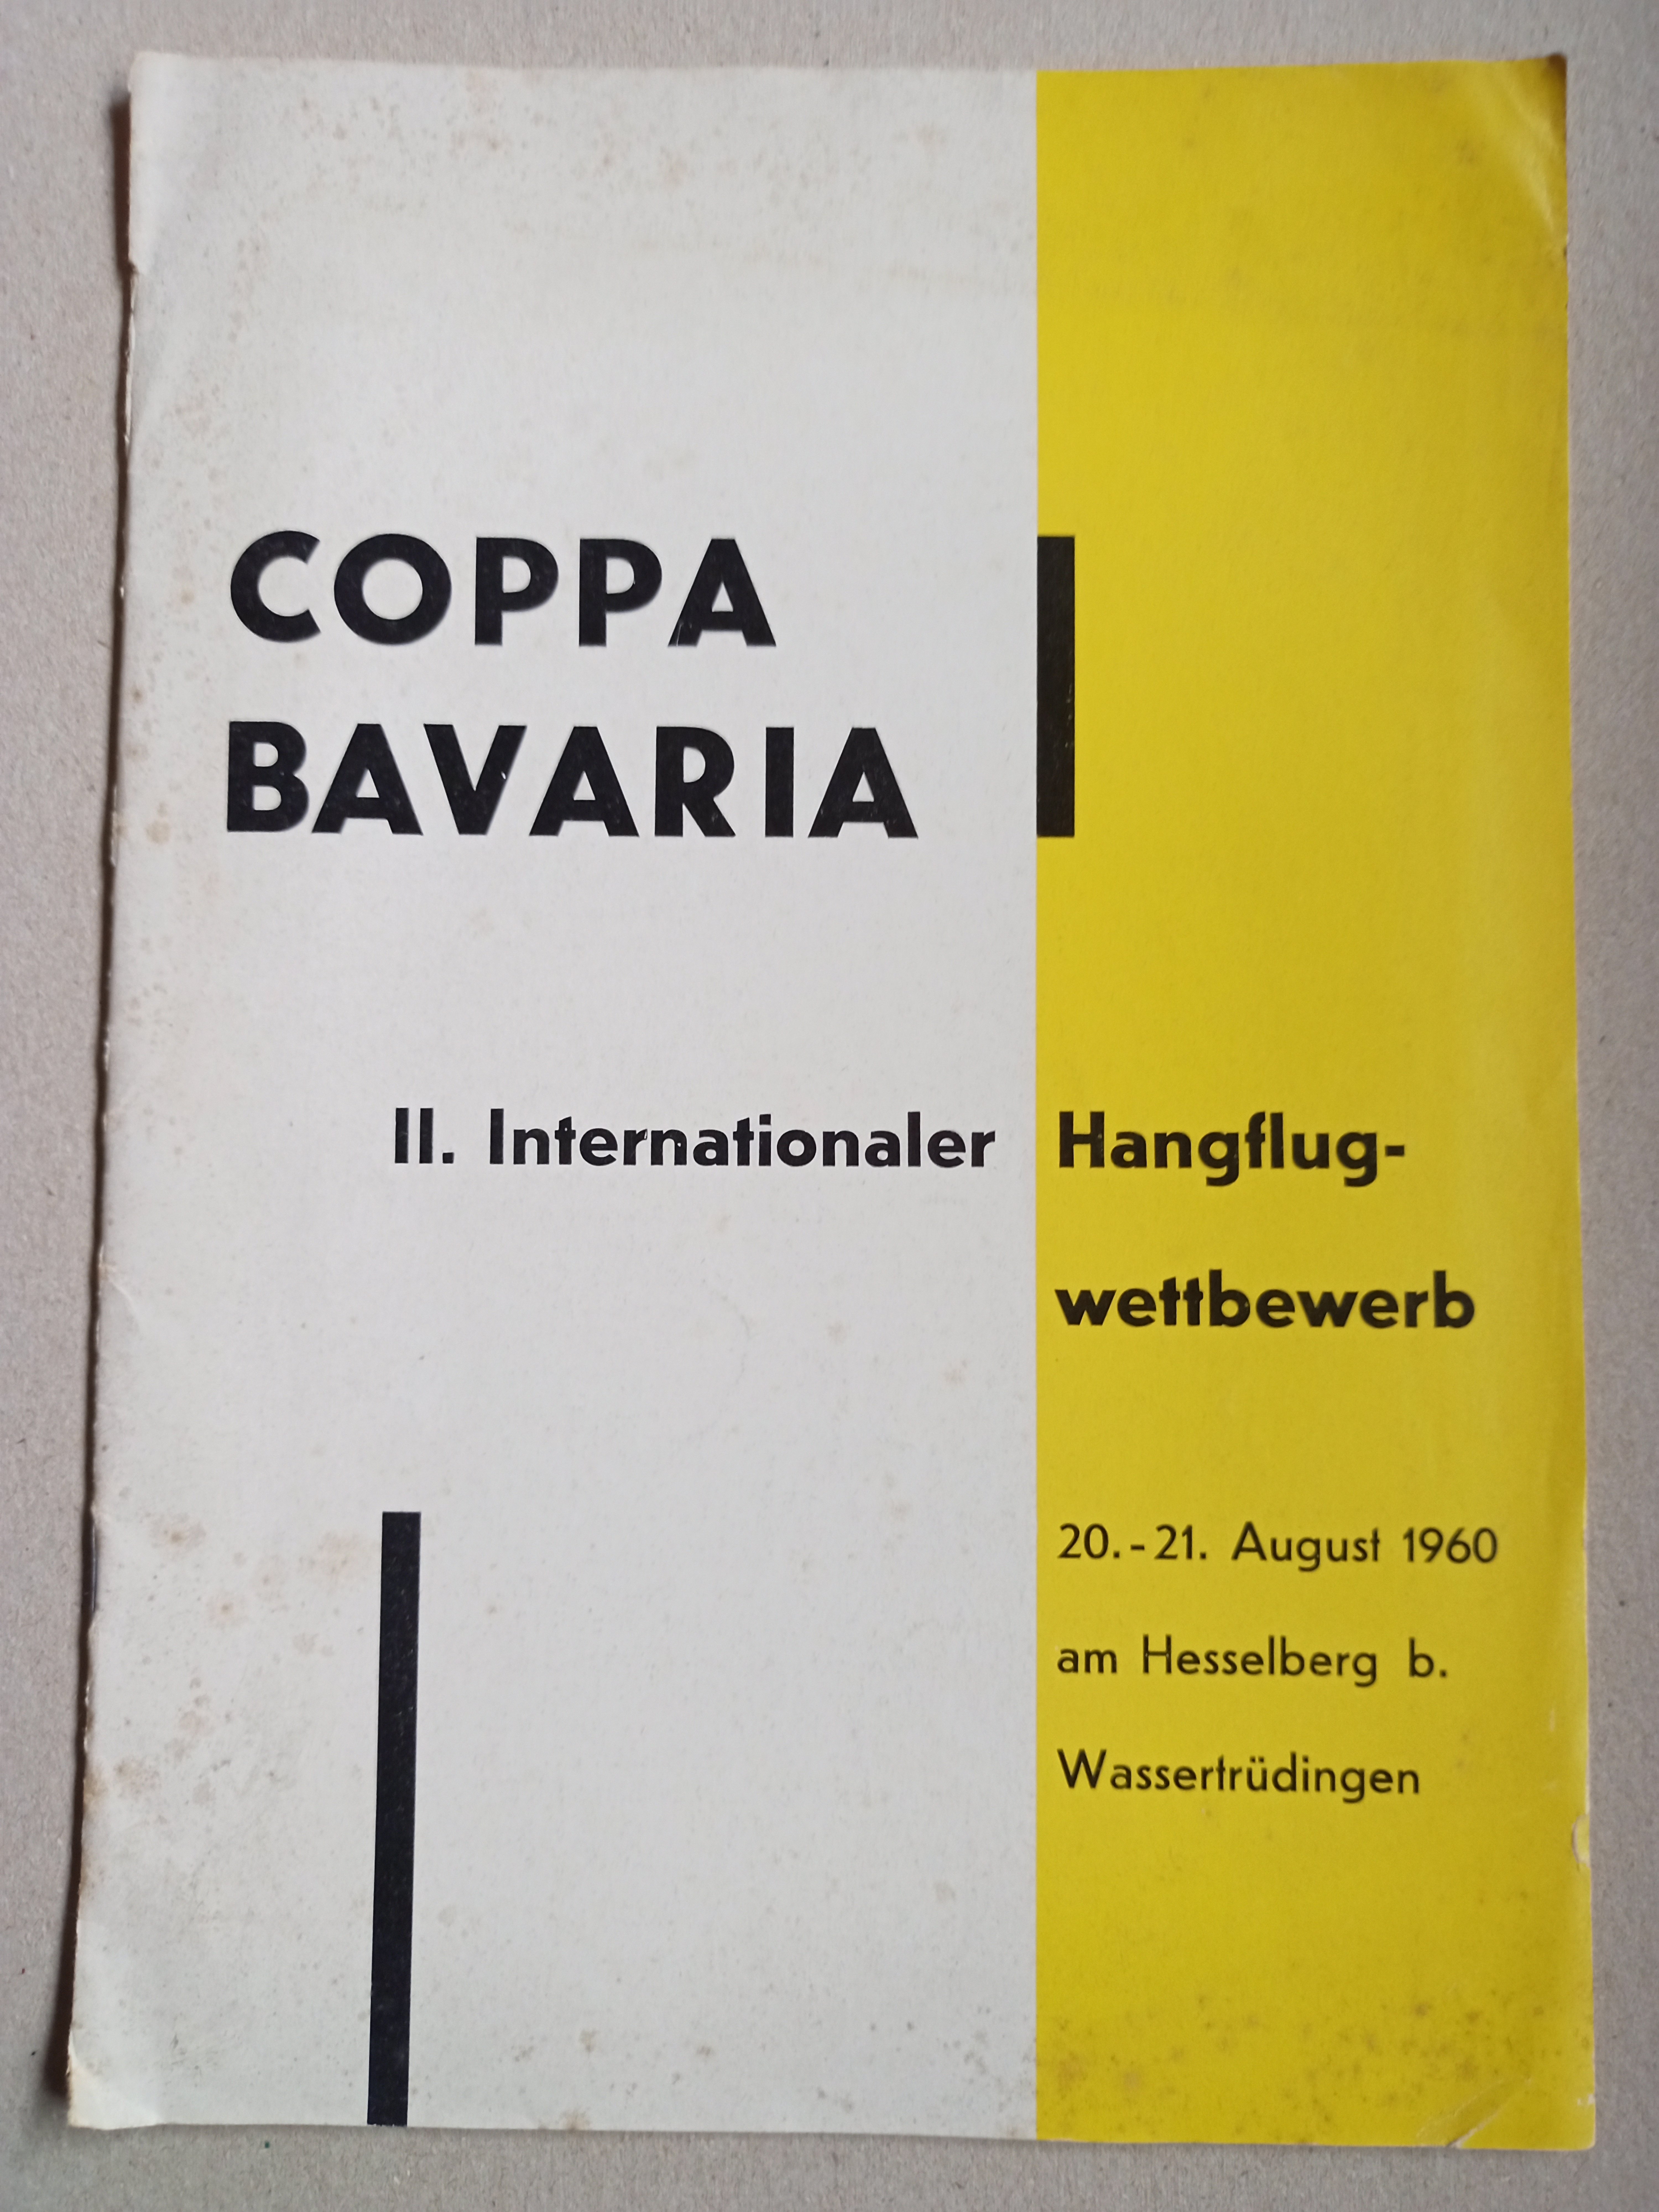 Coppe Bavaria 1960 (Deutsches Segelflugmuseum mit Modellflug CC BY-NC-SA)